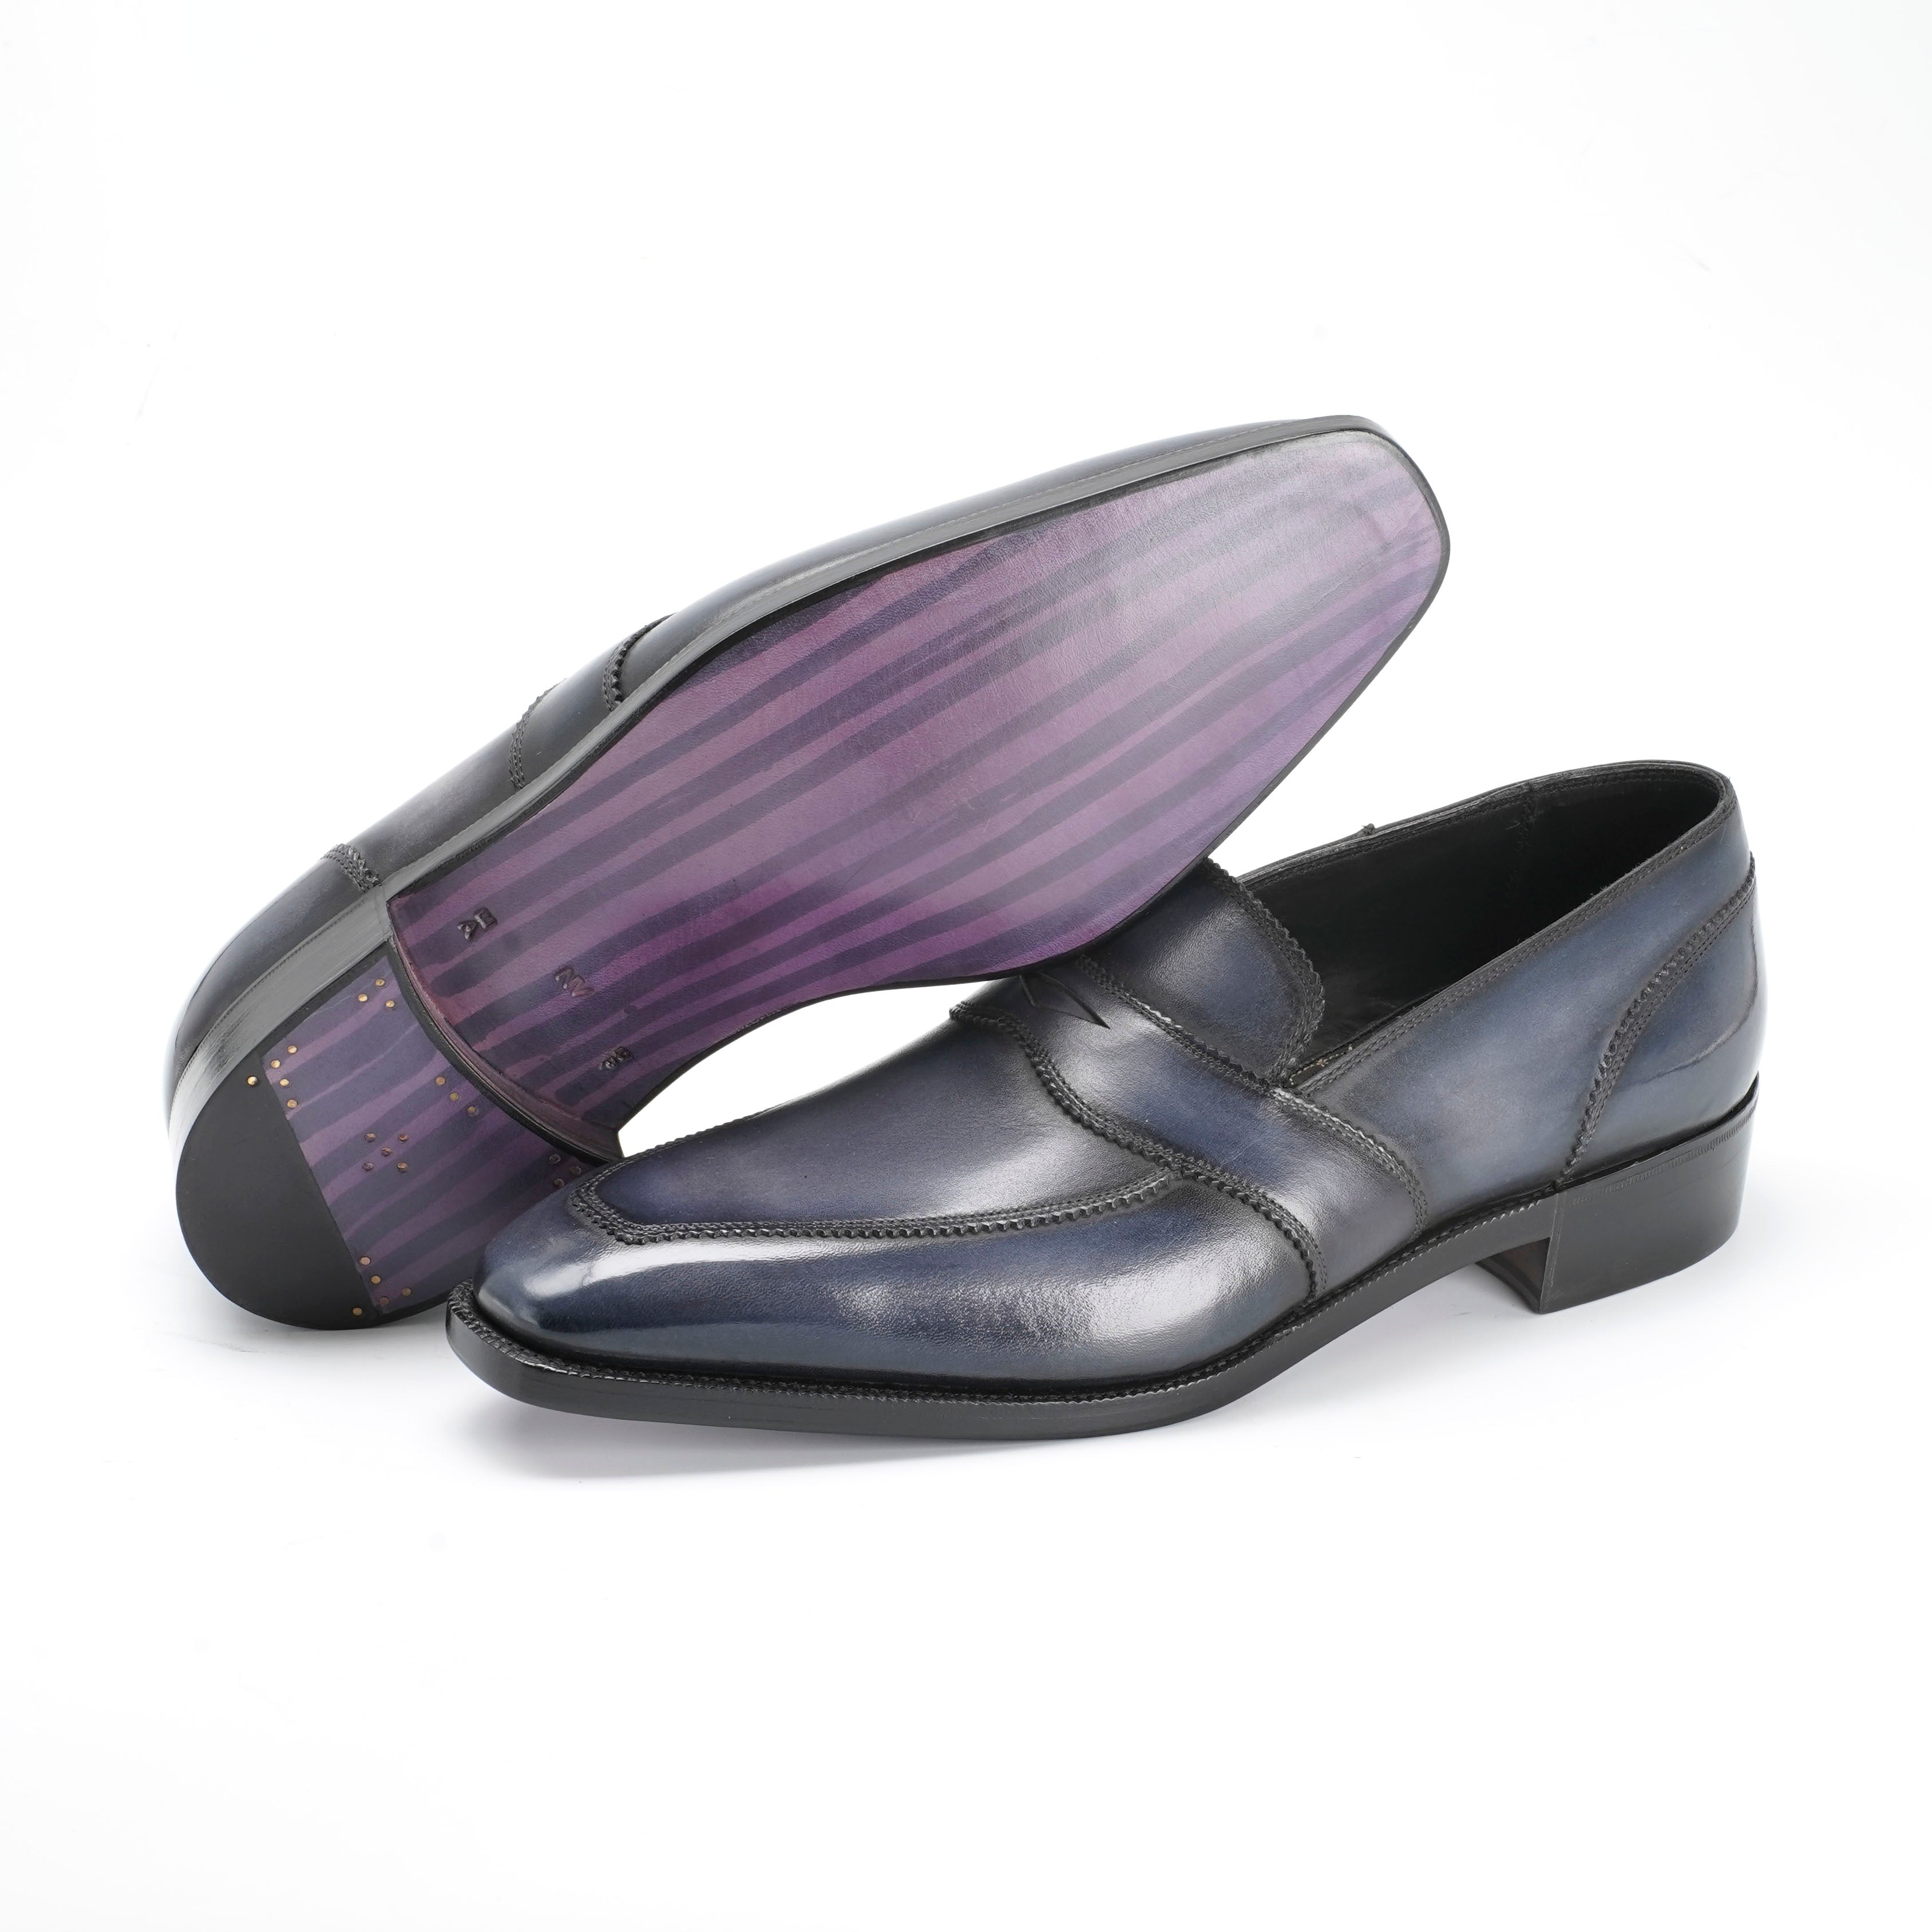 James Penny Loafer by Norman Vilalta Bespoke Shoemakers of Barcelona